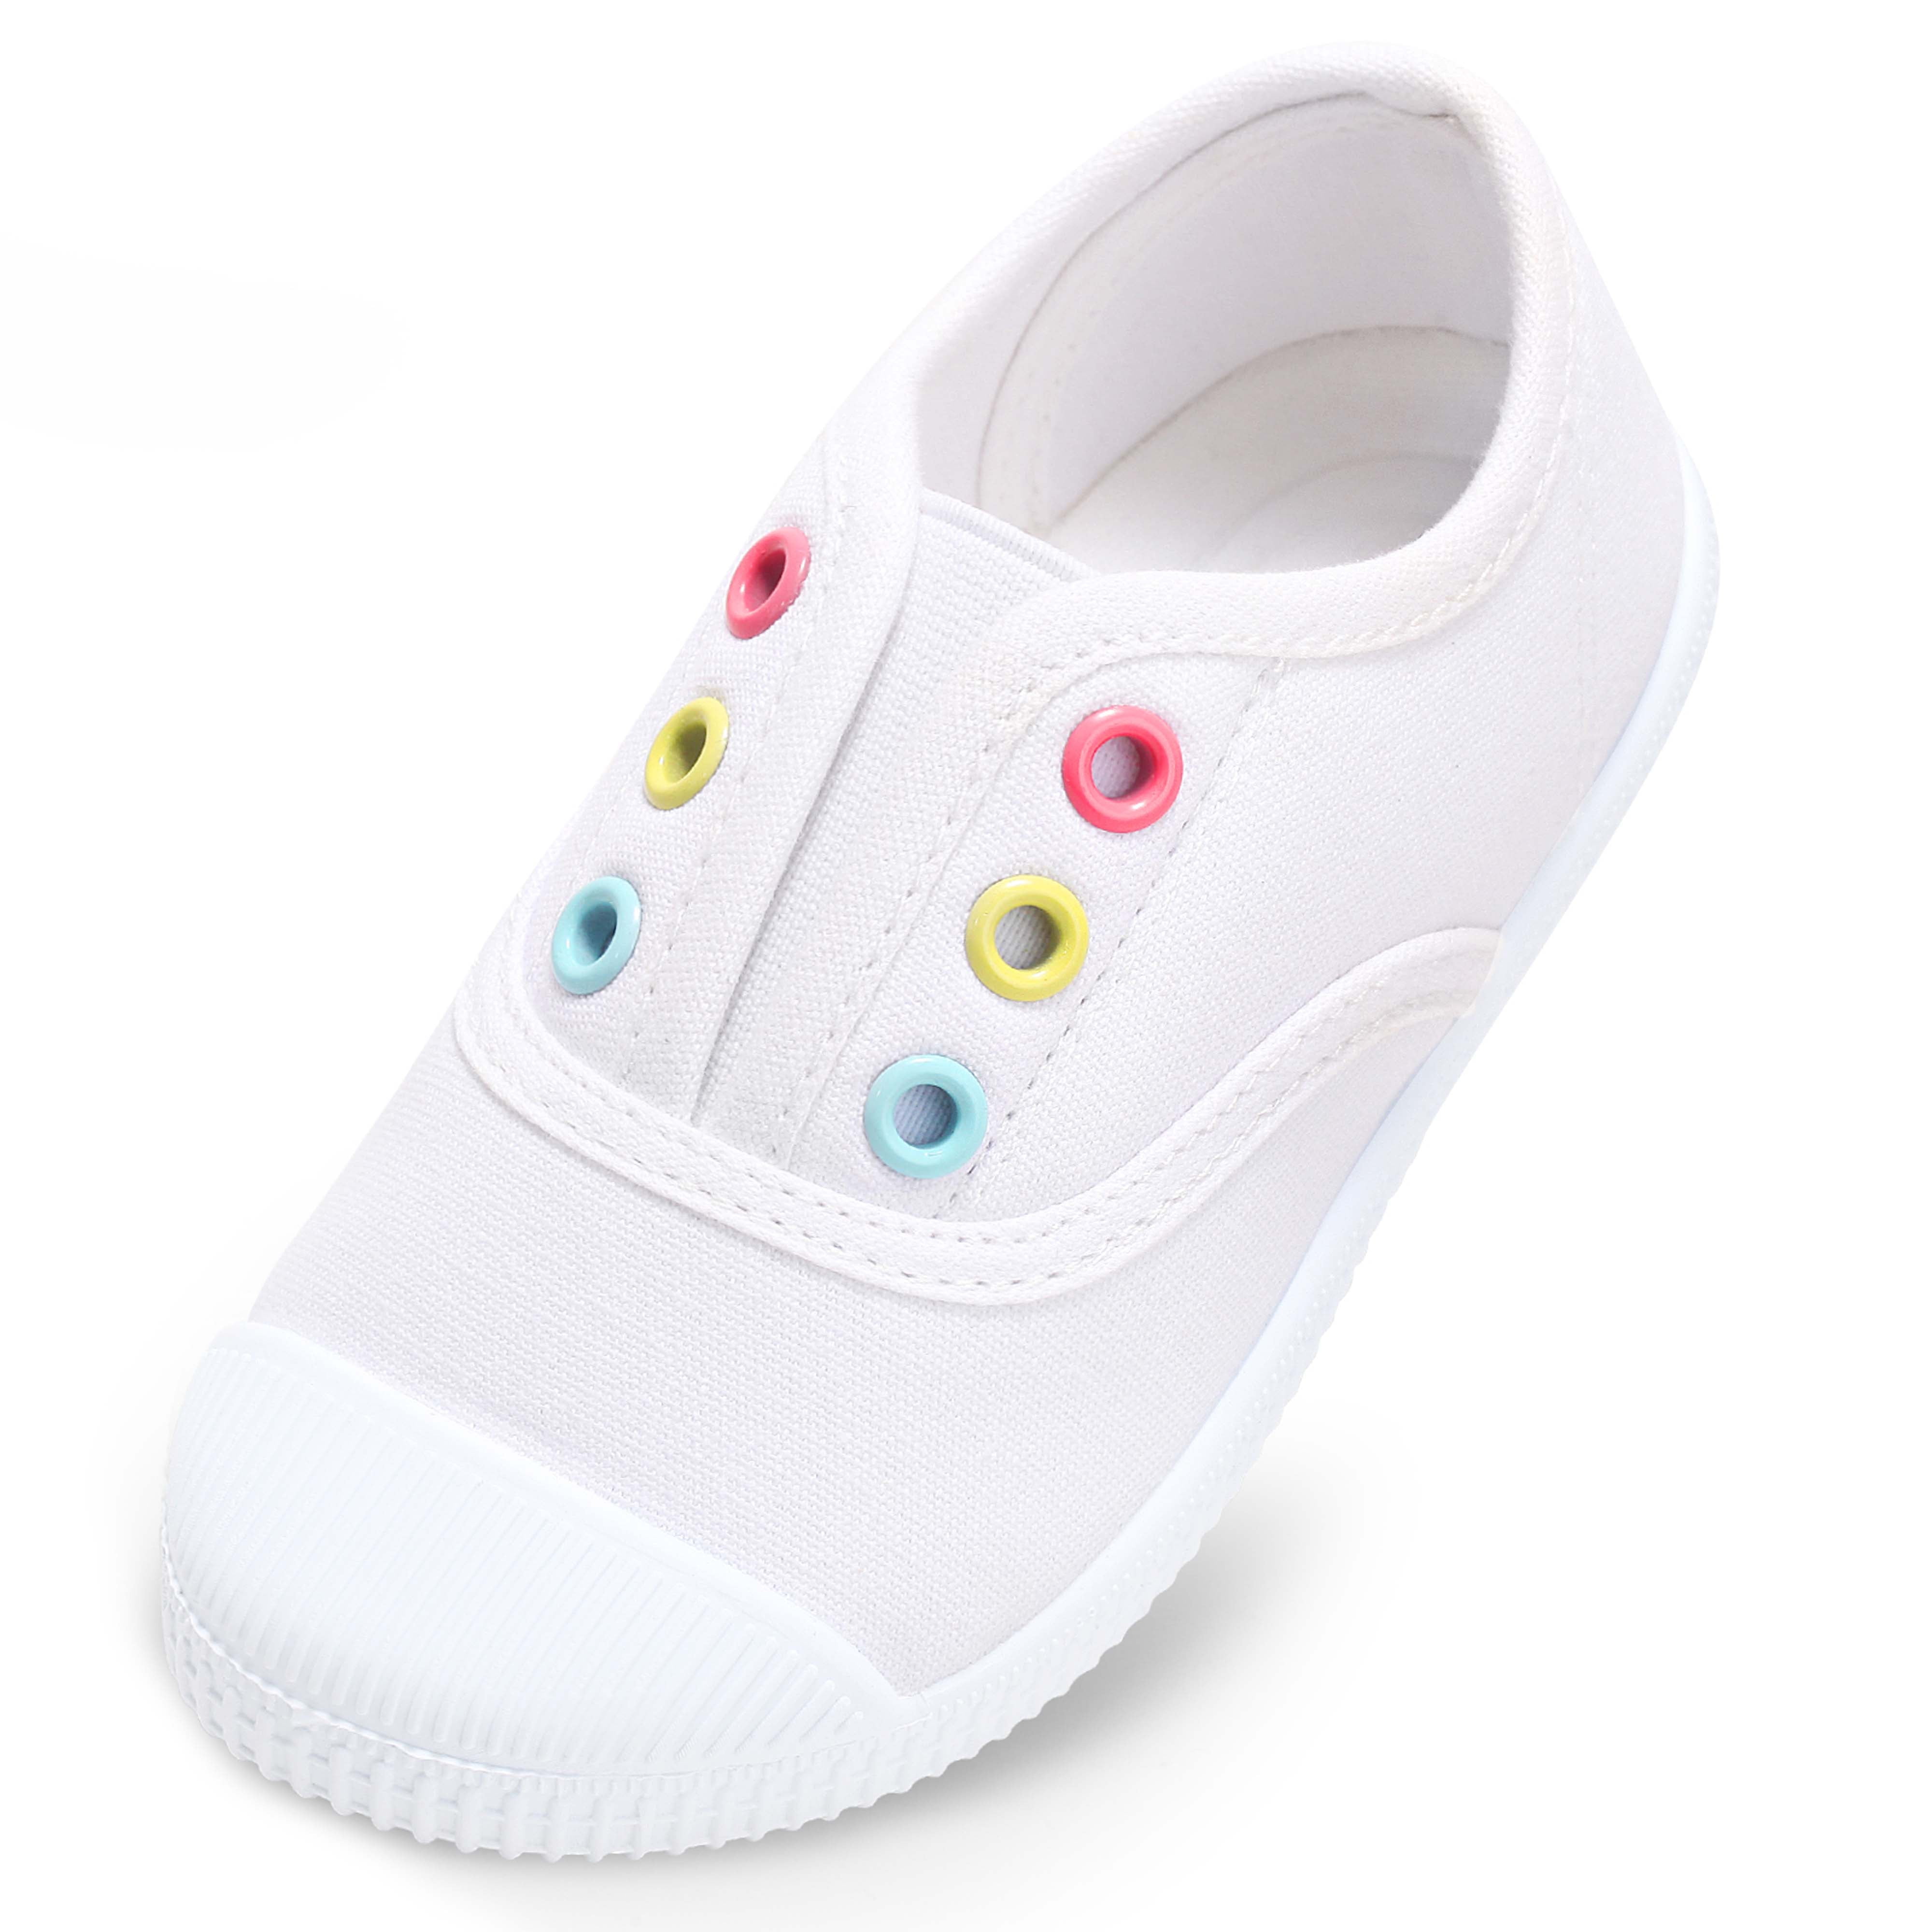 JDEFEG Size 6 Tennis Shoes Boys Toddler Shoes Breathable Slip On